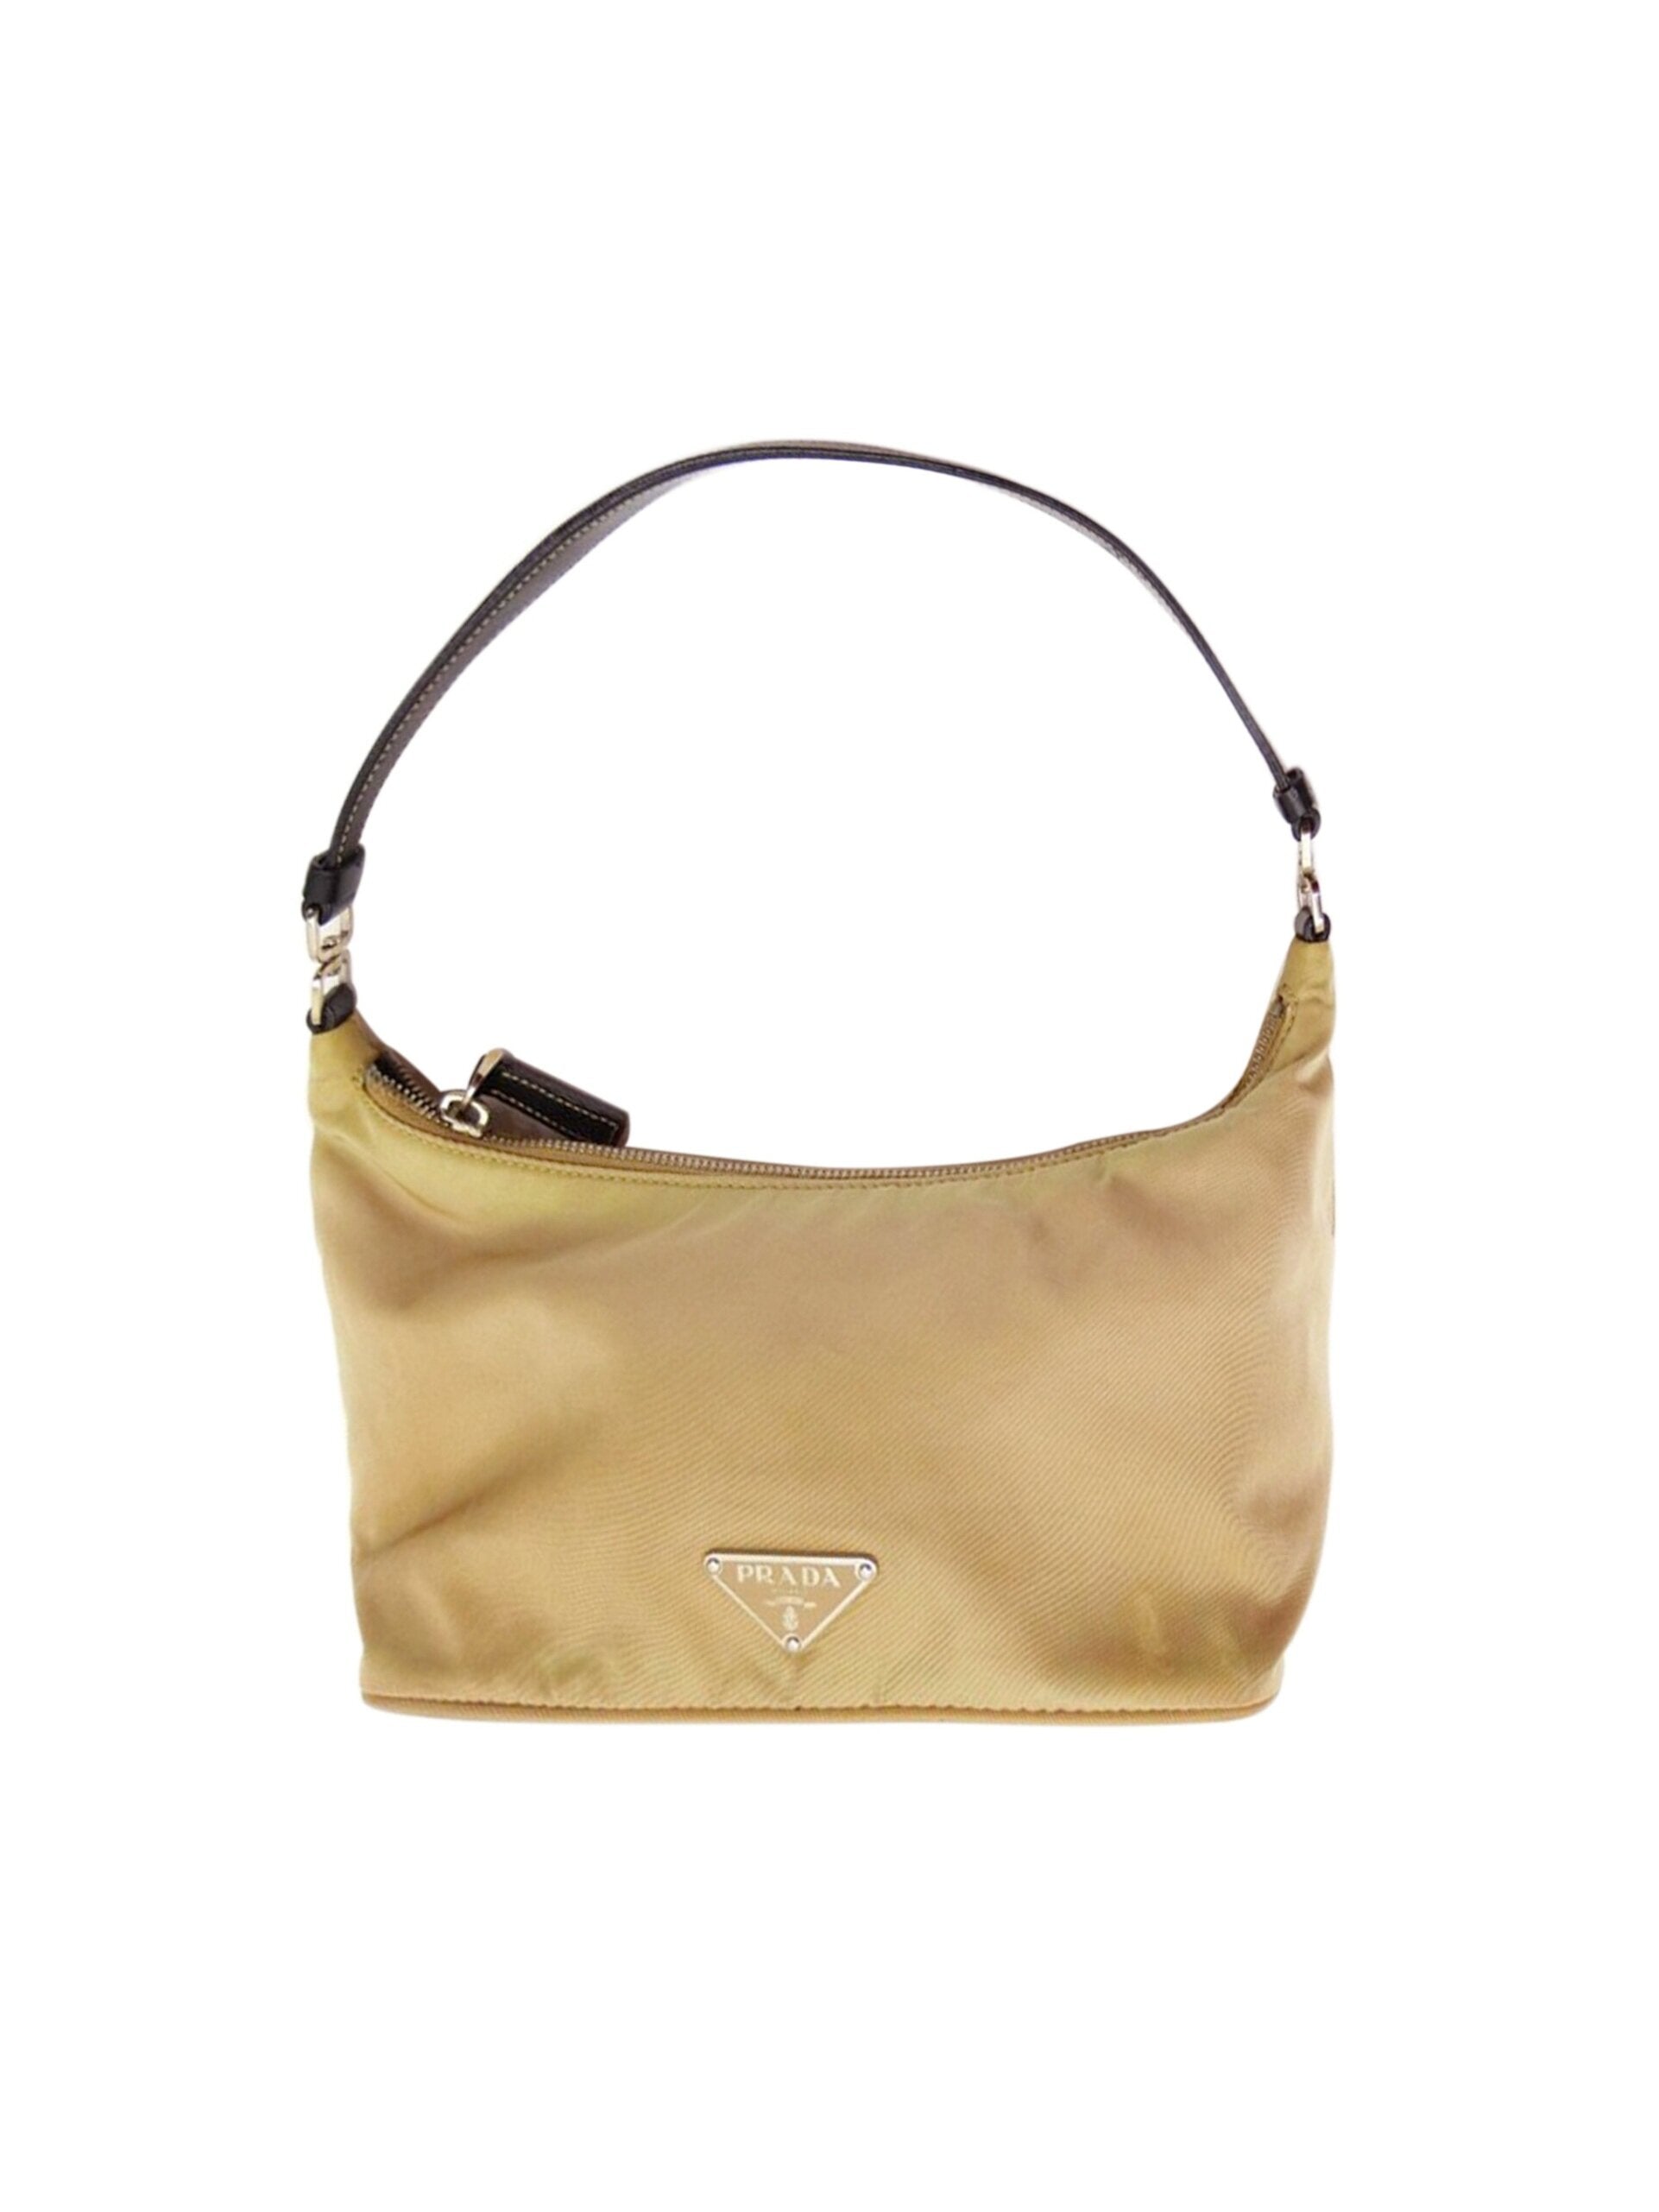 Prada 2000s Yellow Nylon Handbag